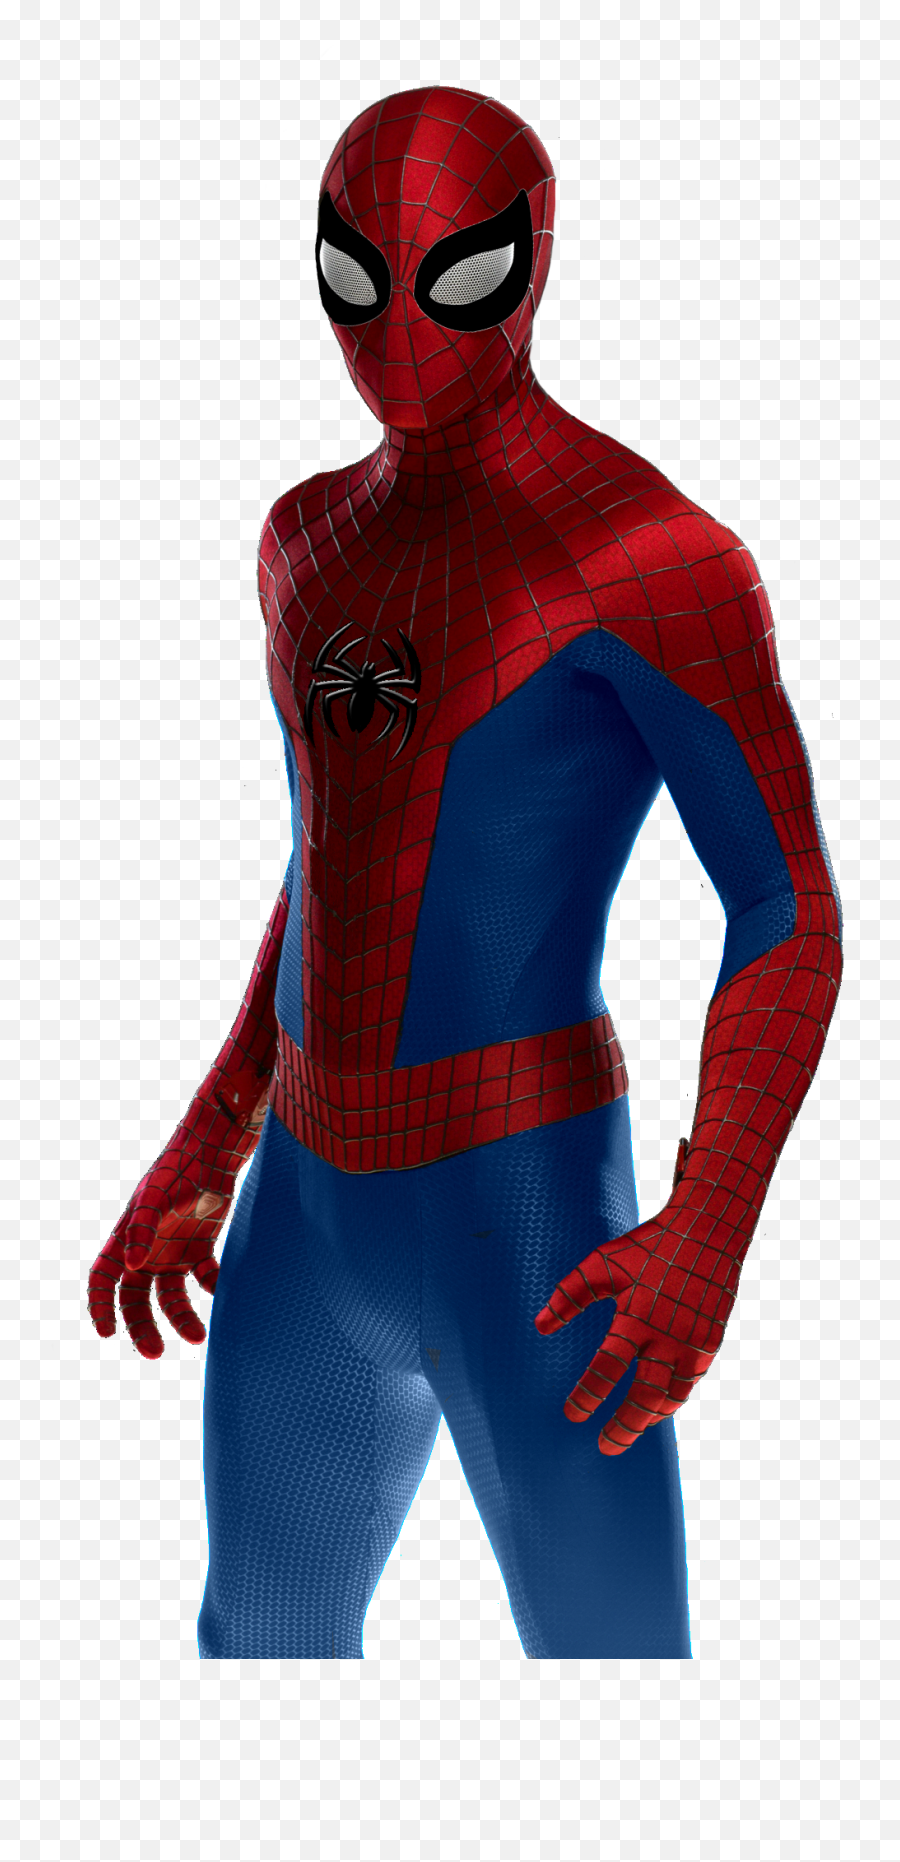 Spiderman Mask Transparent Png - High Resolution Spiderman Hd,Spiderman Mask Png